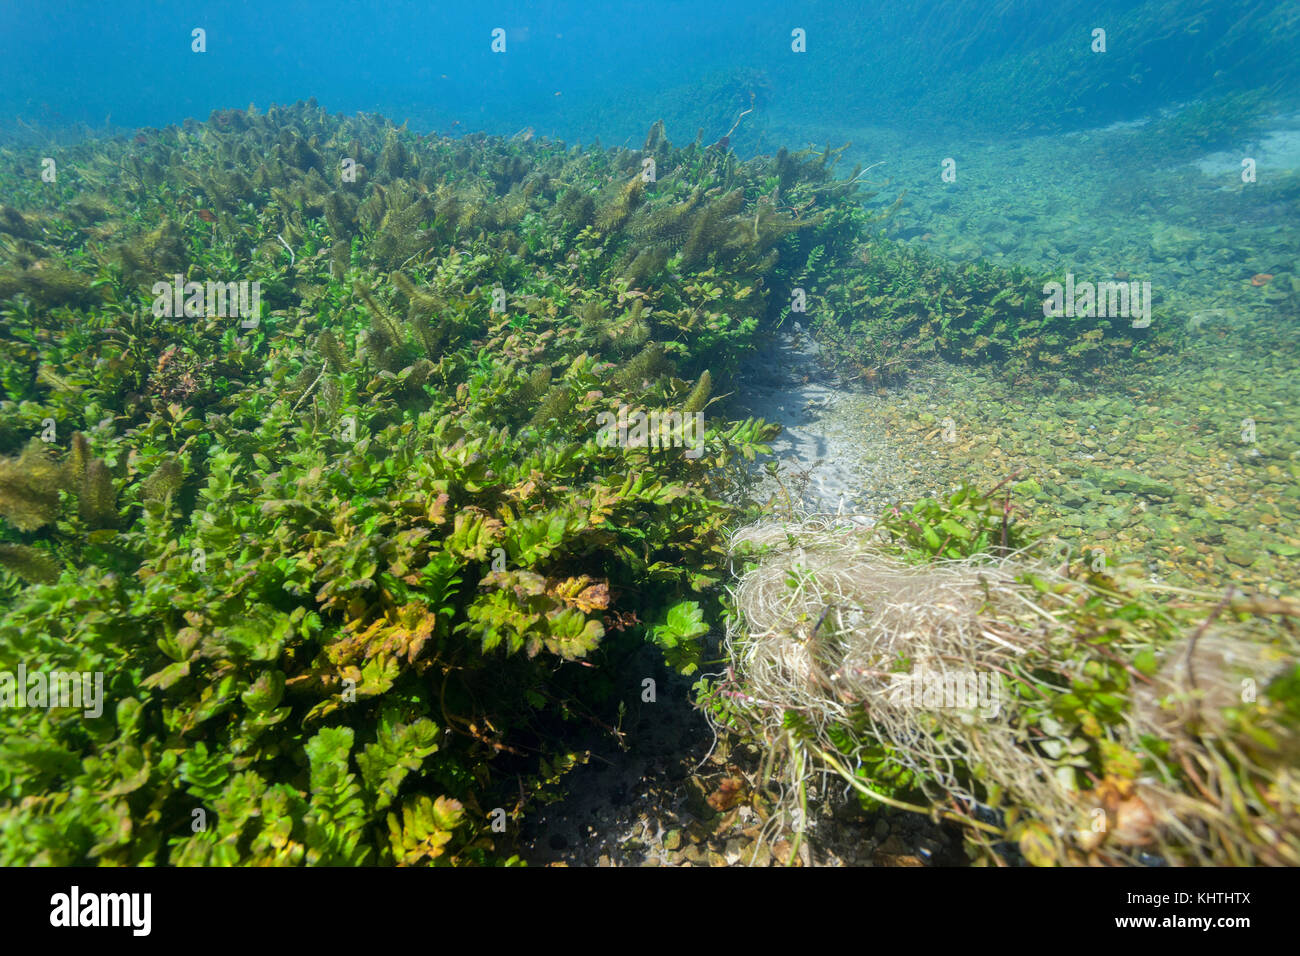 Underwater vegetation of the Dretulja River, Croatia Stock Photo